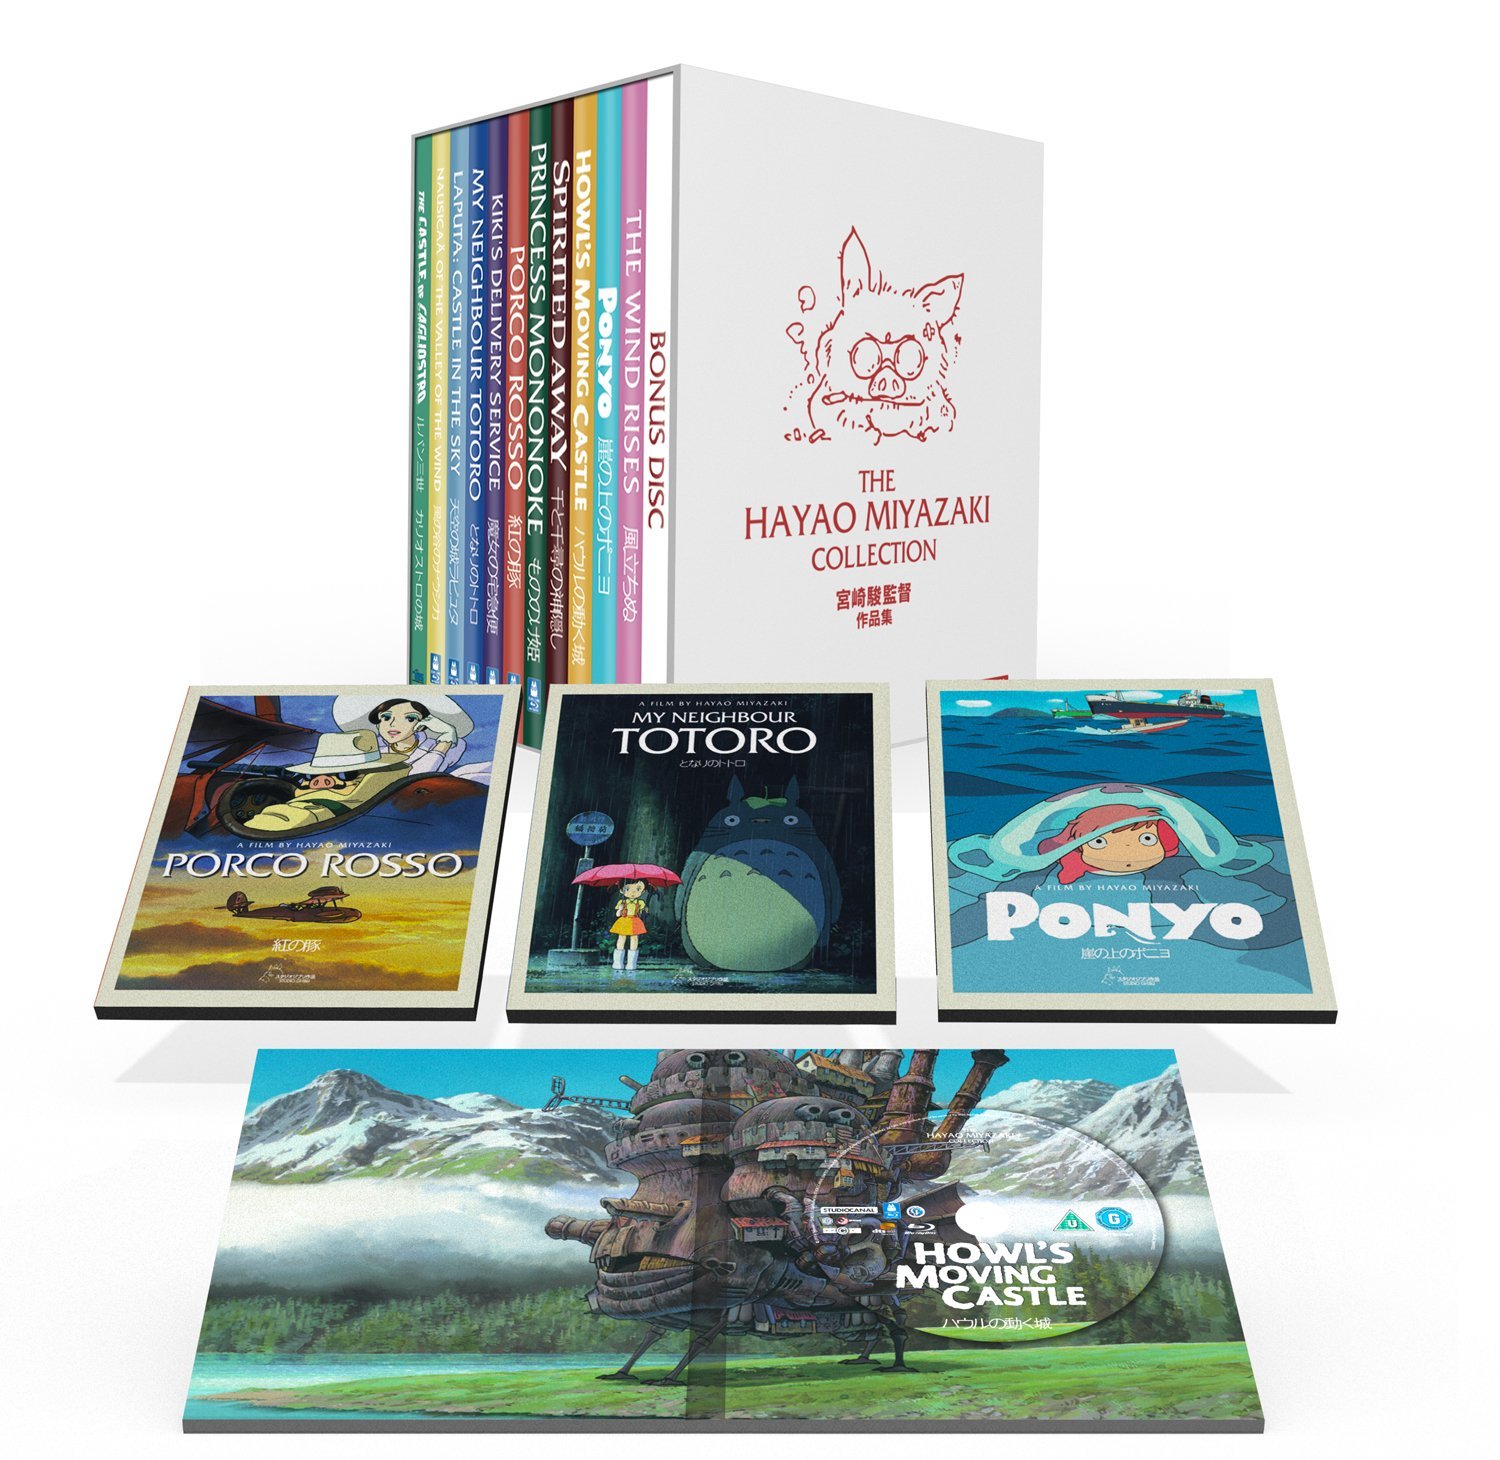 The Hayao Miyazaki Collection - Studio Ghibli (Blu-ray Boxset) [UK